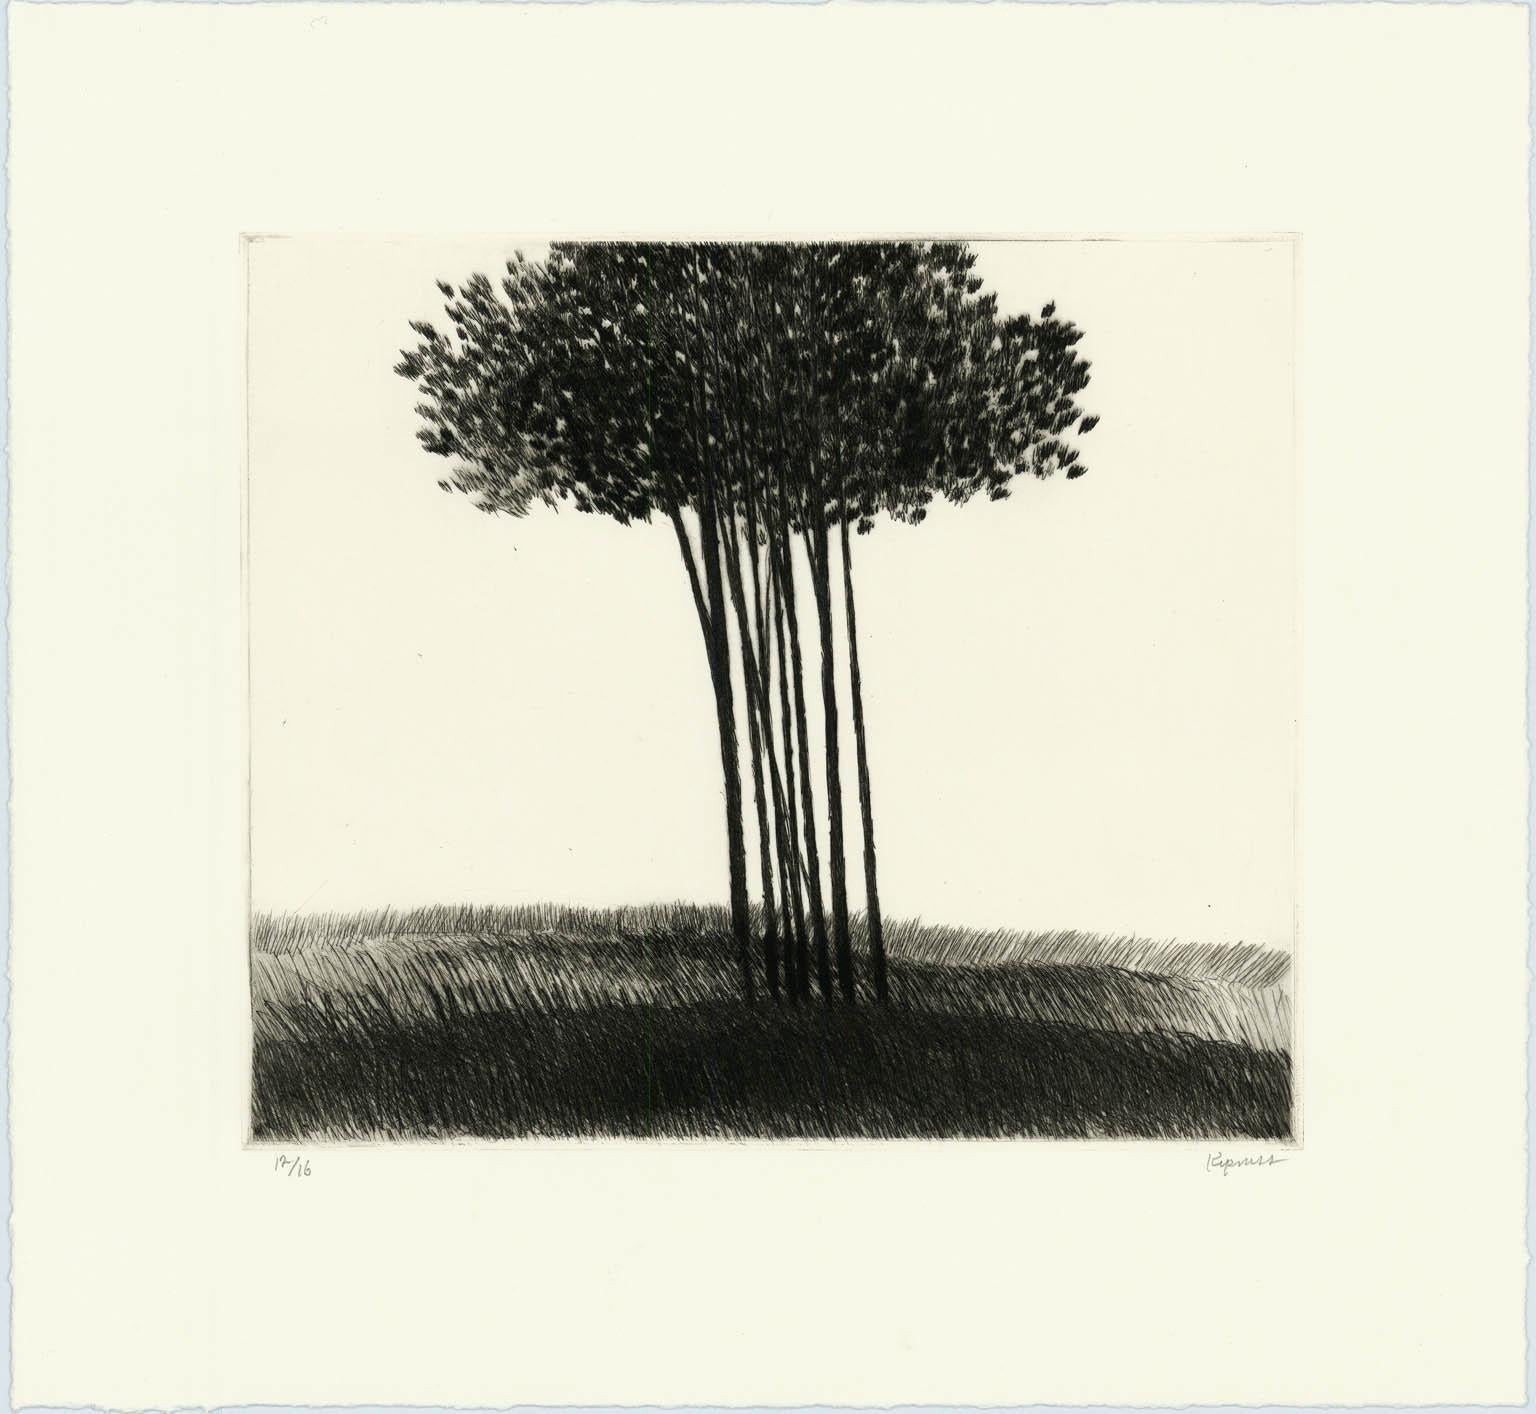 Robert Kipniss Landscape Print - A small copse in a field.